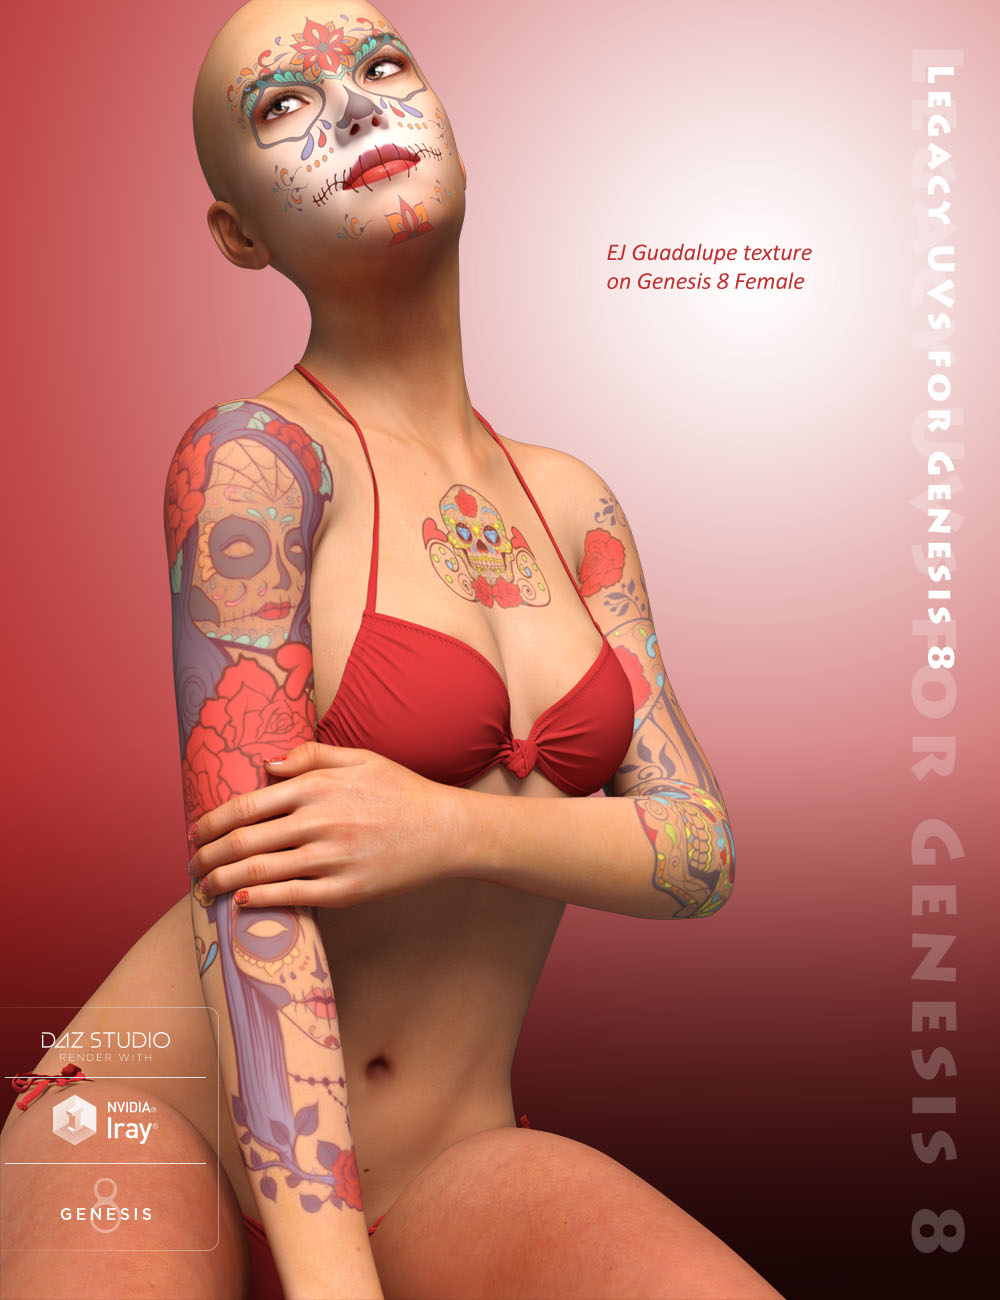 Legacy UVs for Genesis 8: Victoria 5 by: Cayman Studios, 3D Models by Daz 3D